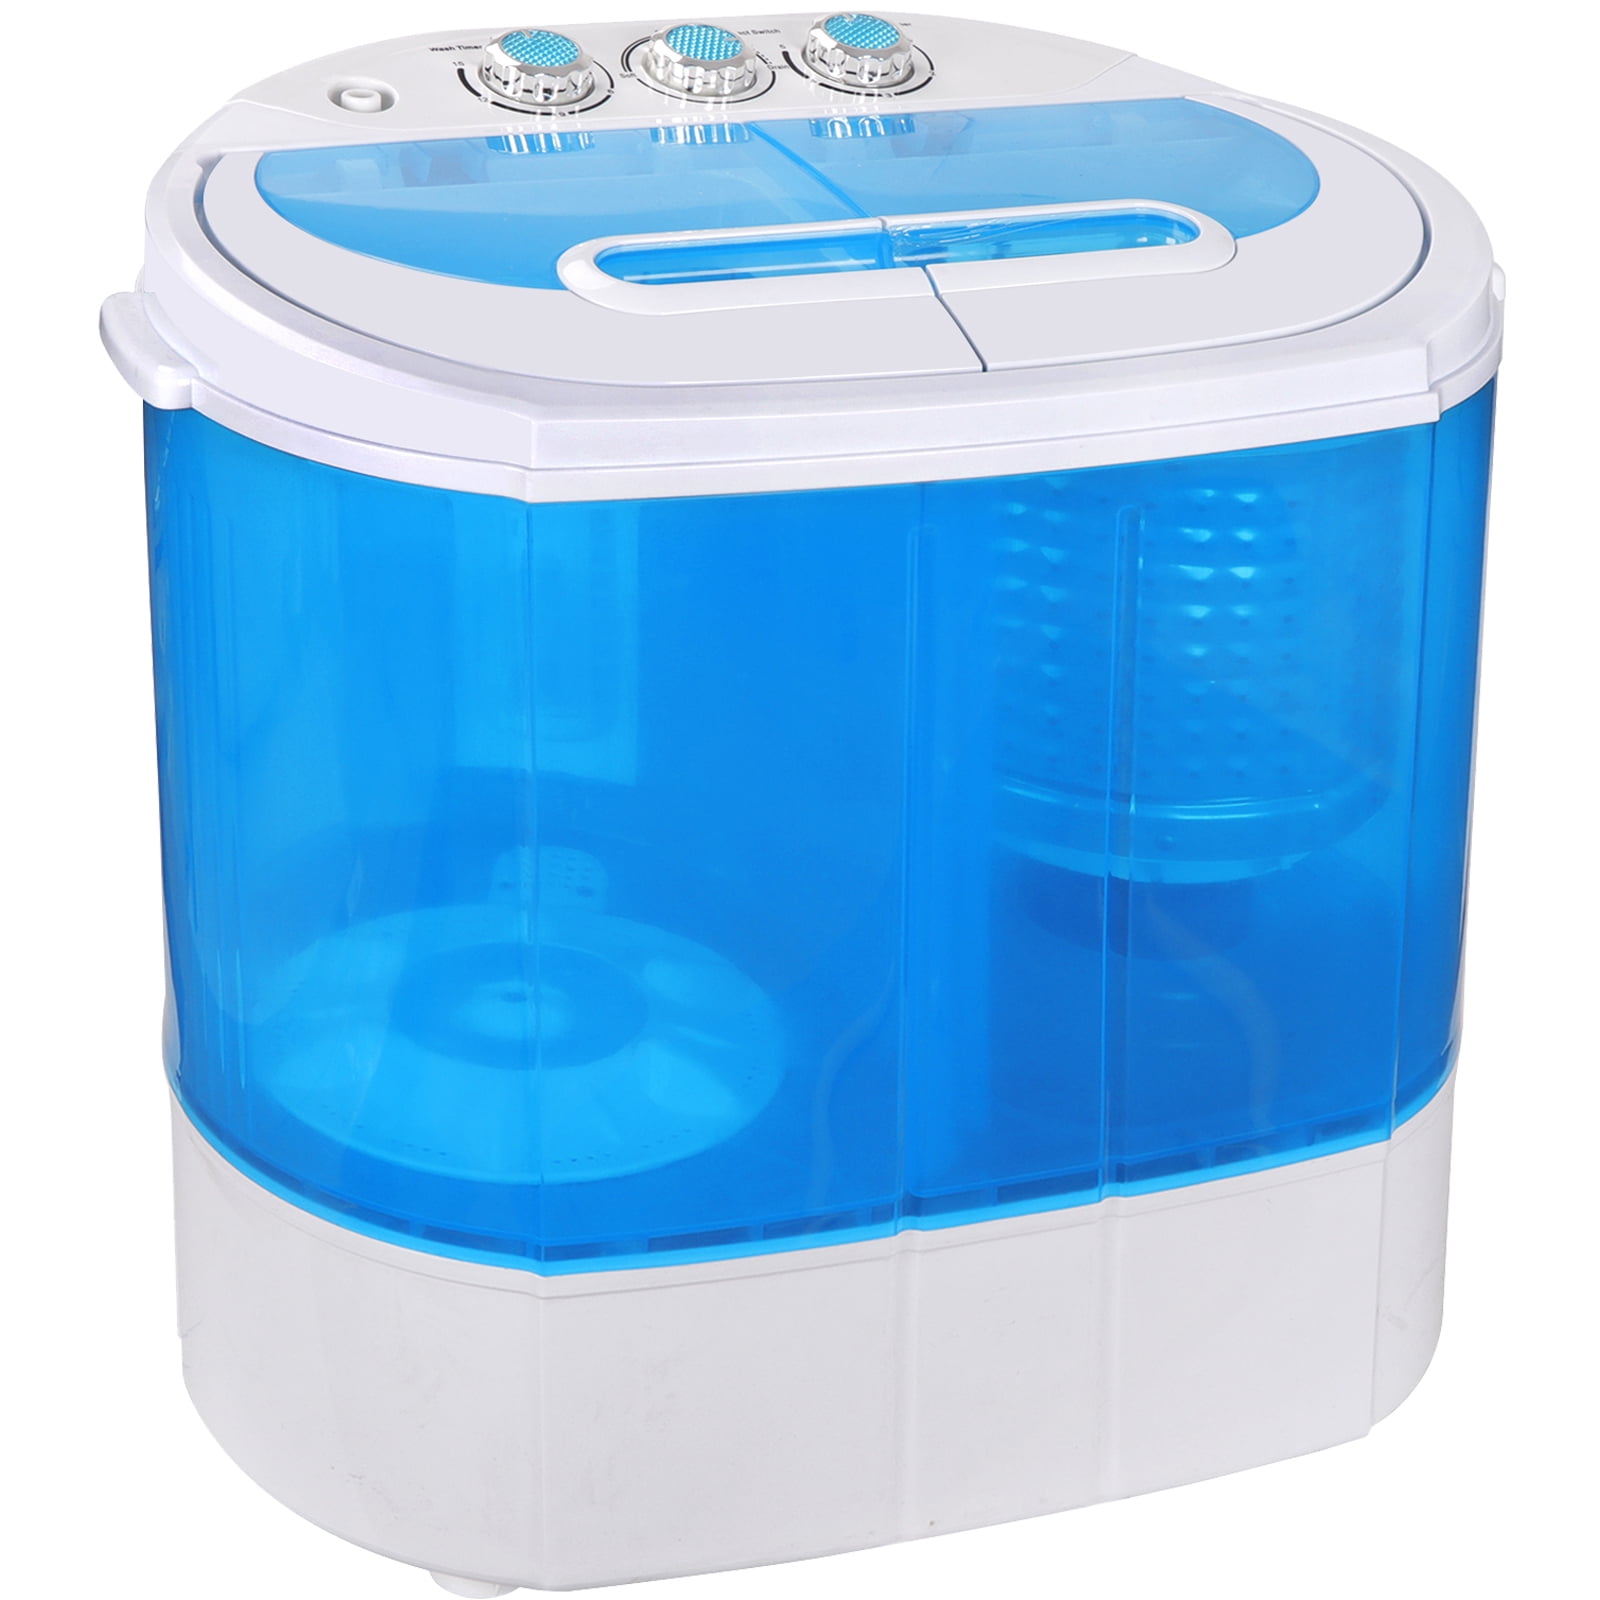 ZENY Portable Washing Machine Mini Twin Tub Washing Australia